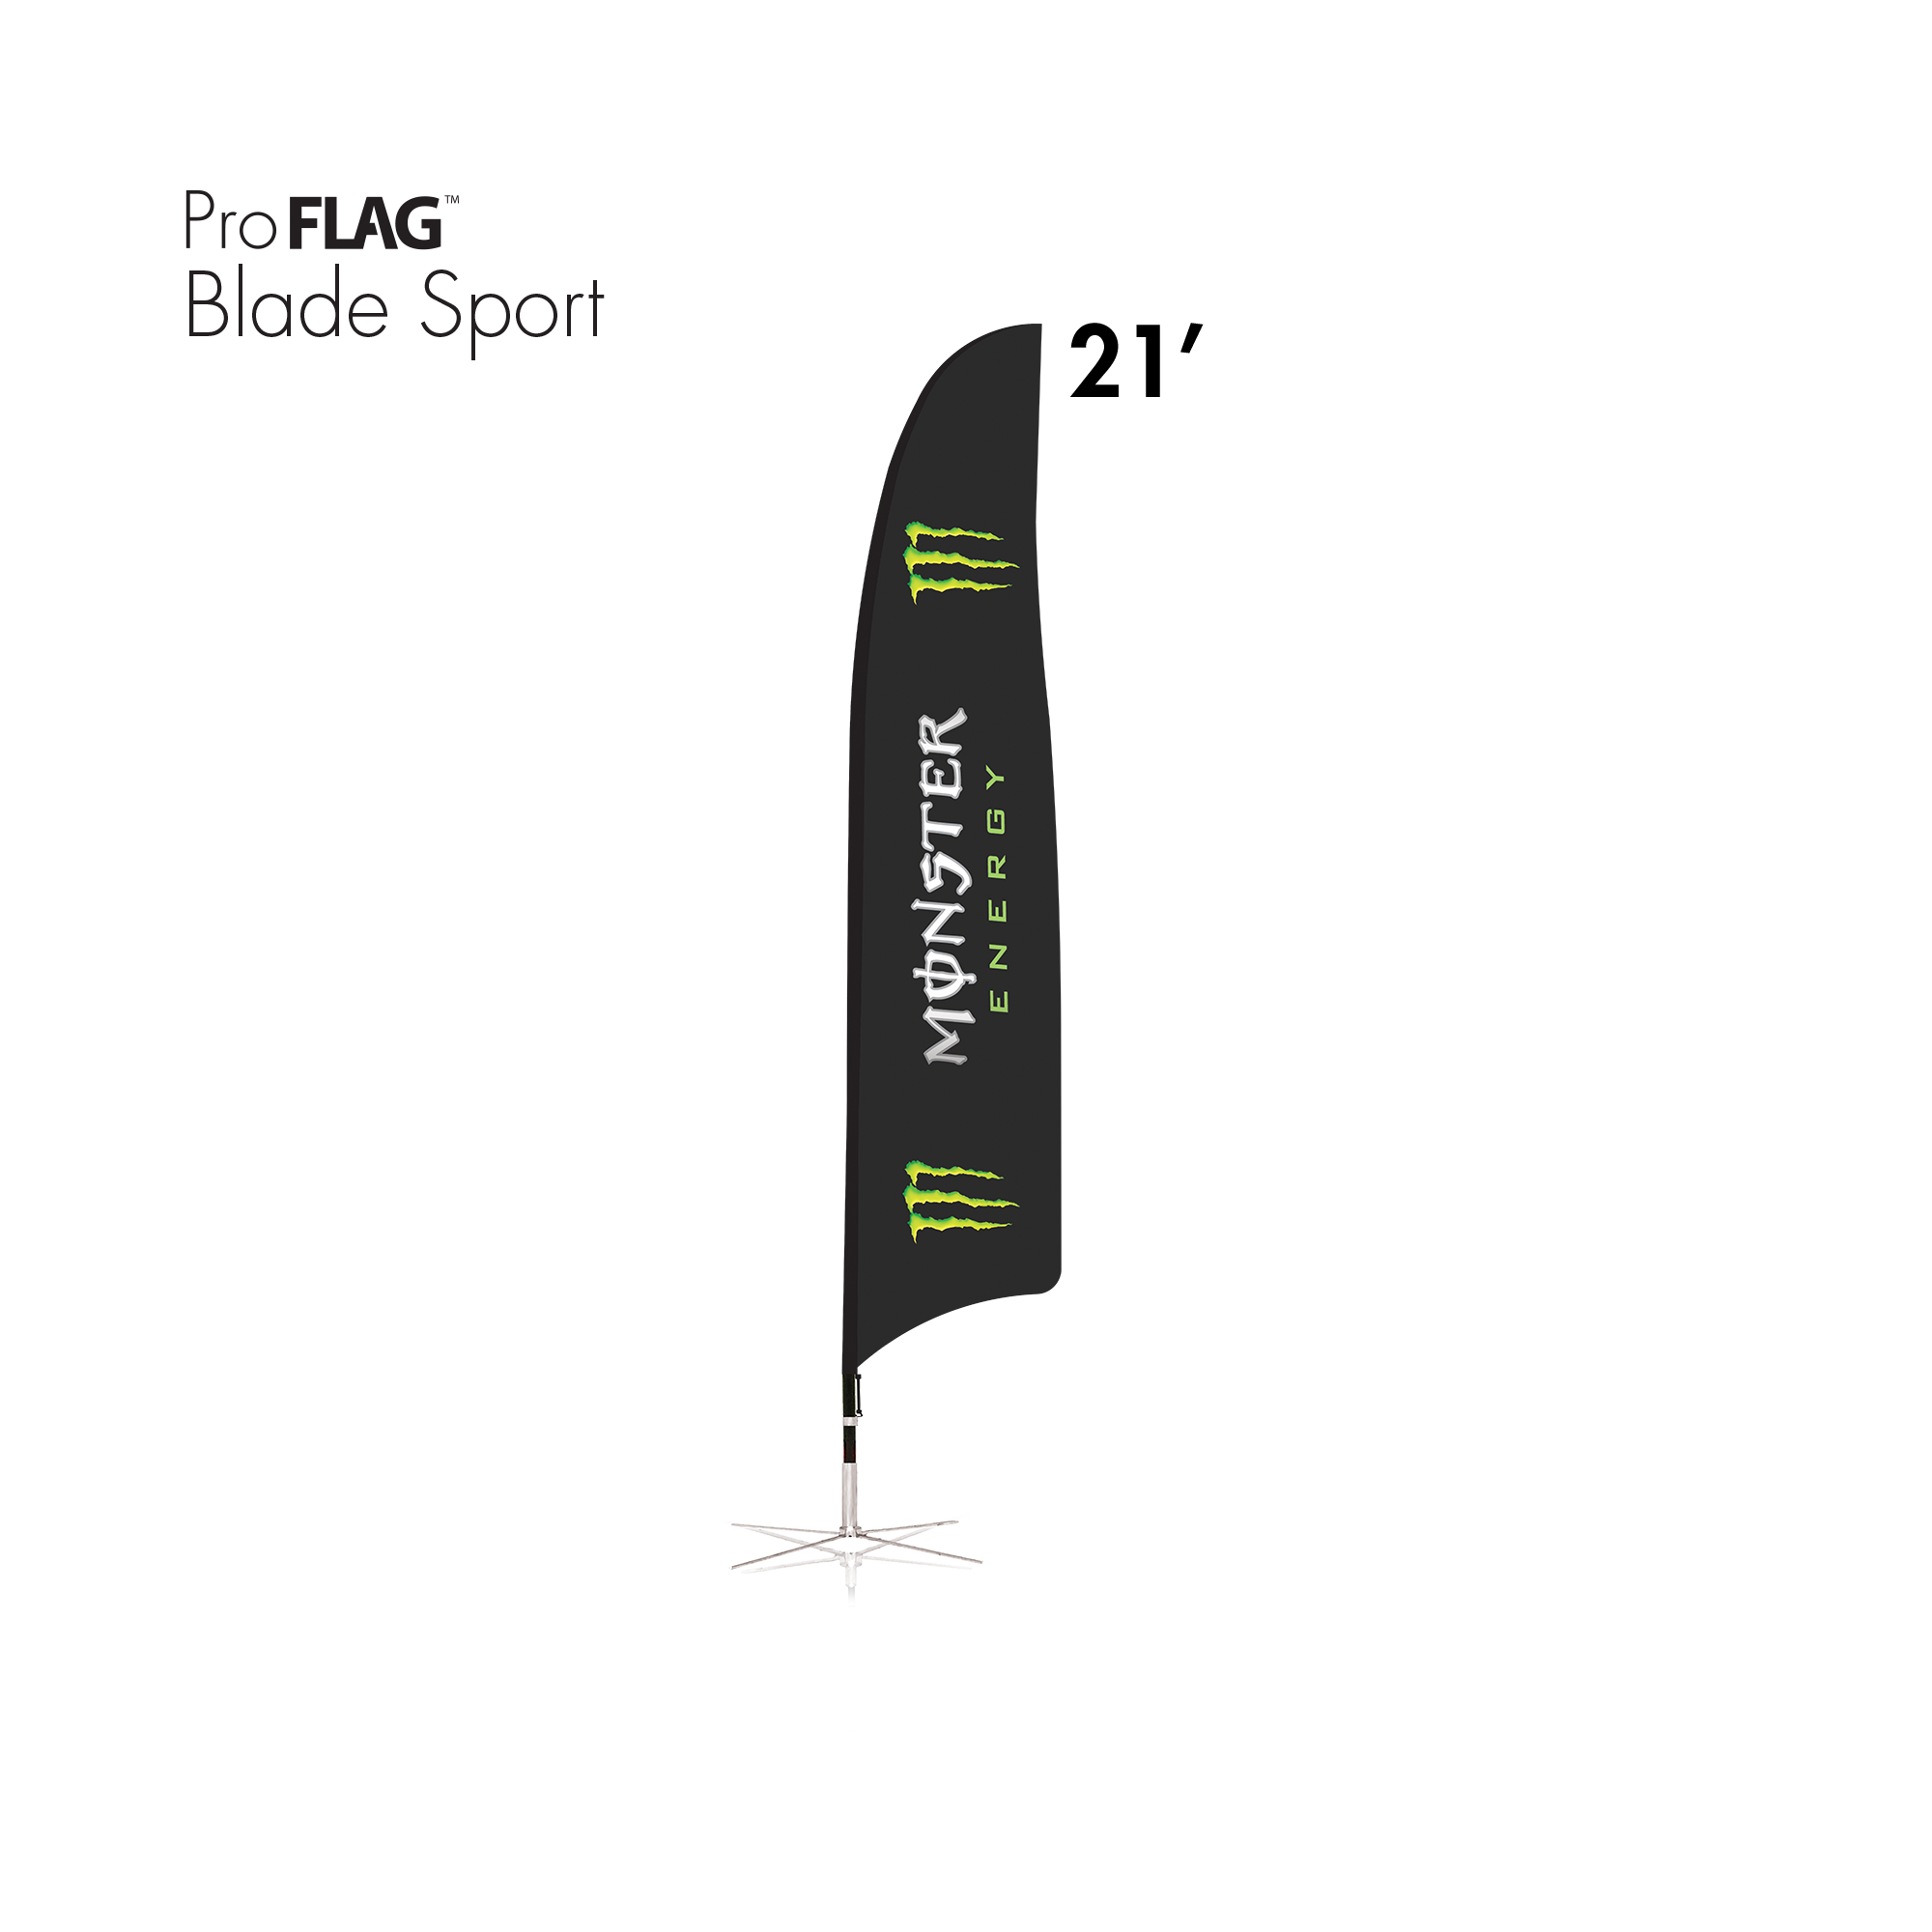 Blade Sport Flag